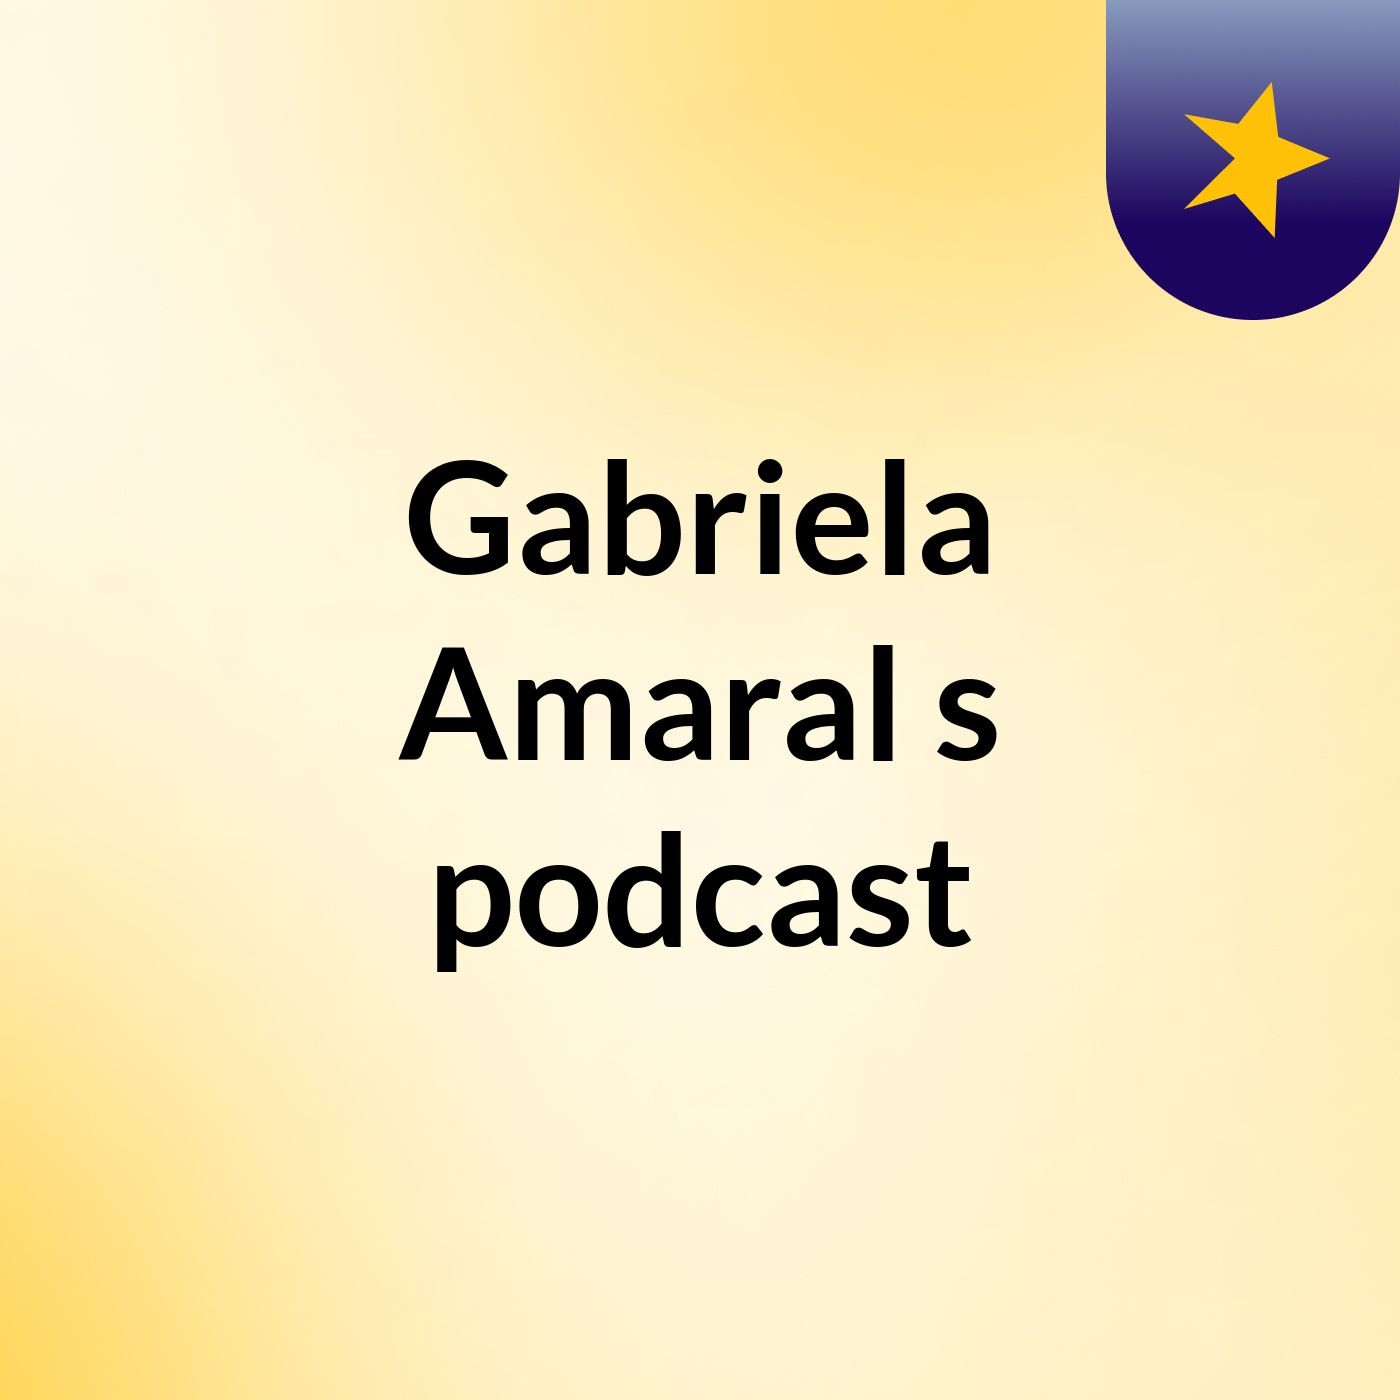 Gabriela Amaral's podcast